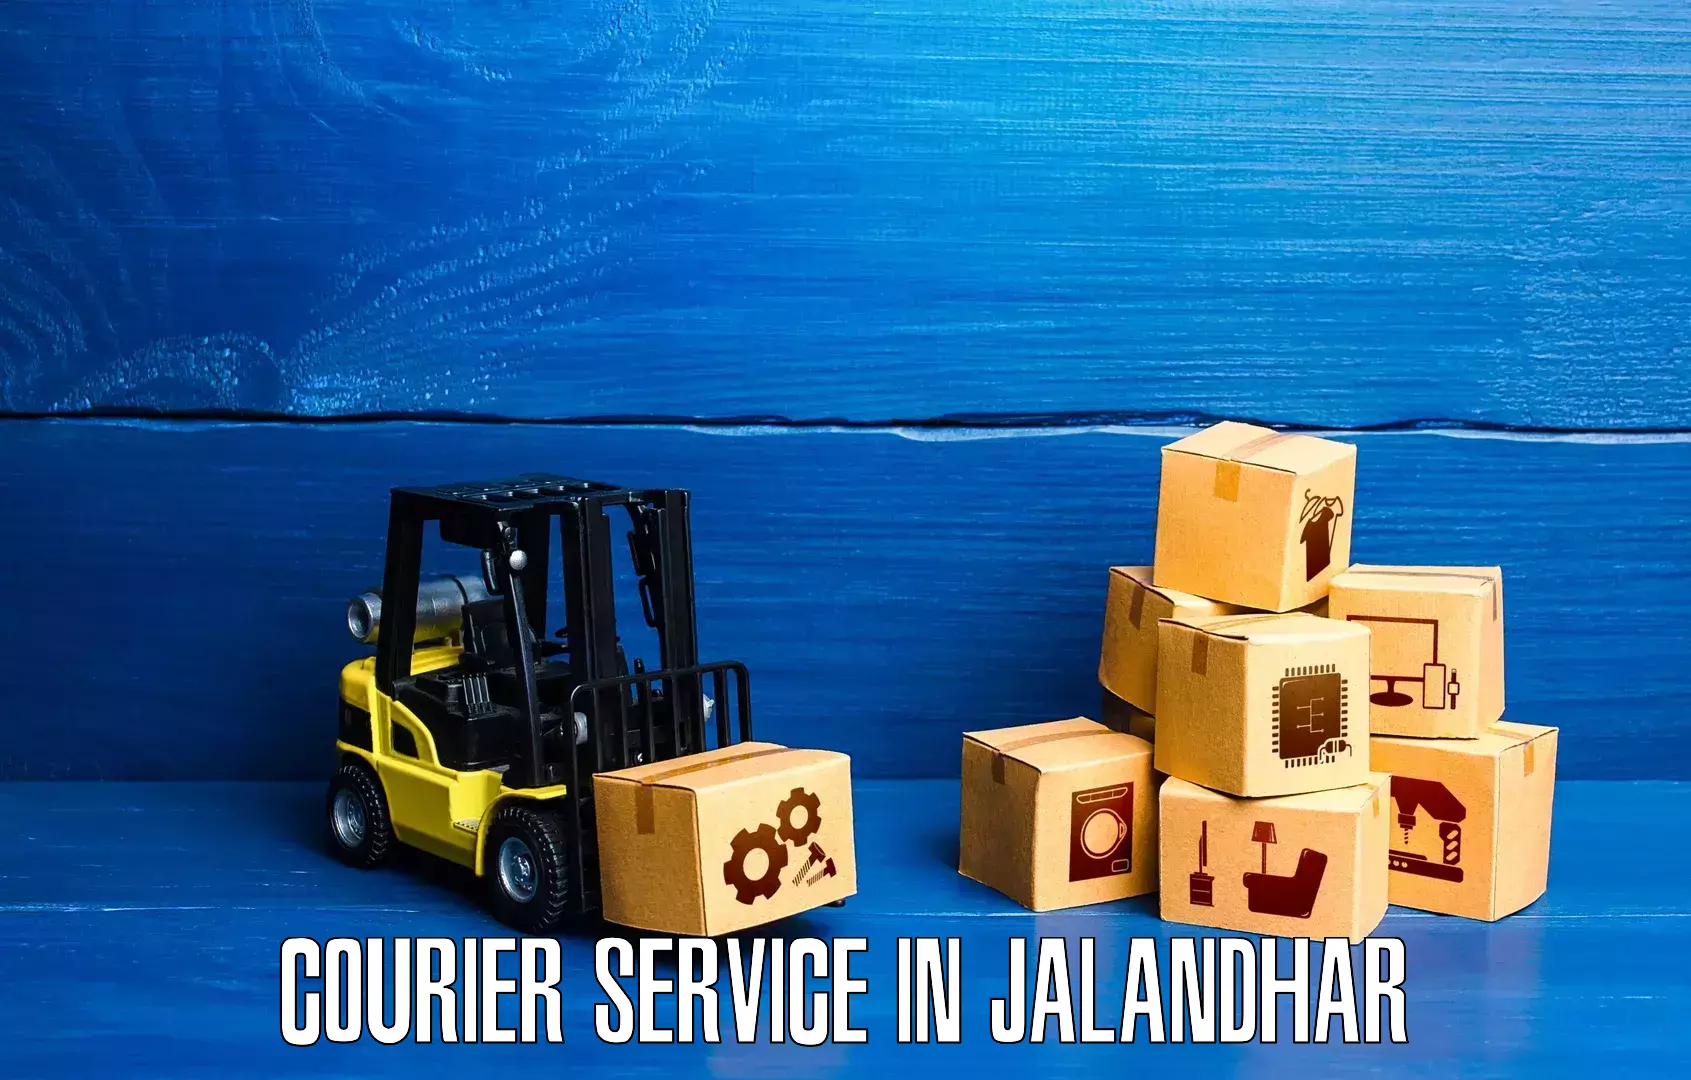 Comprehensive freight services in Jalandhar